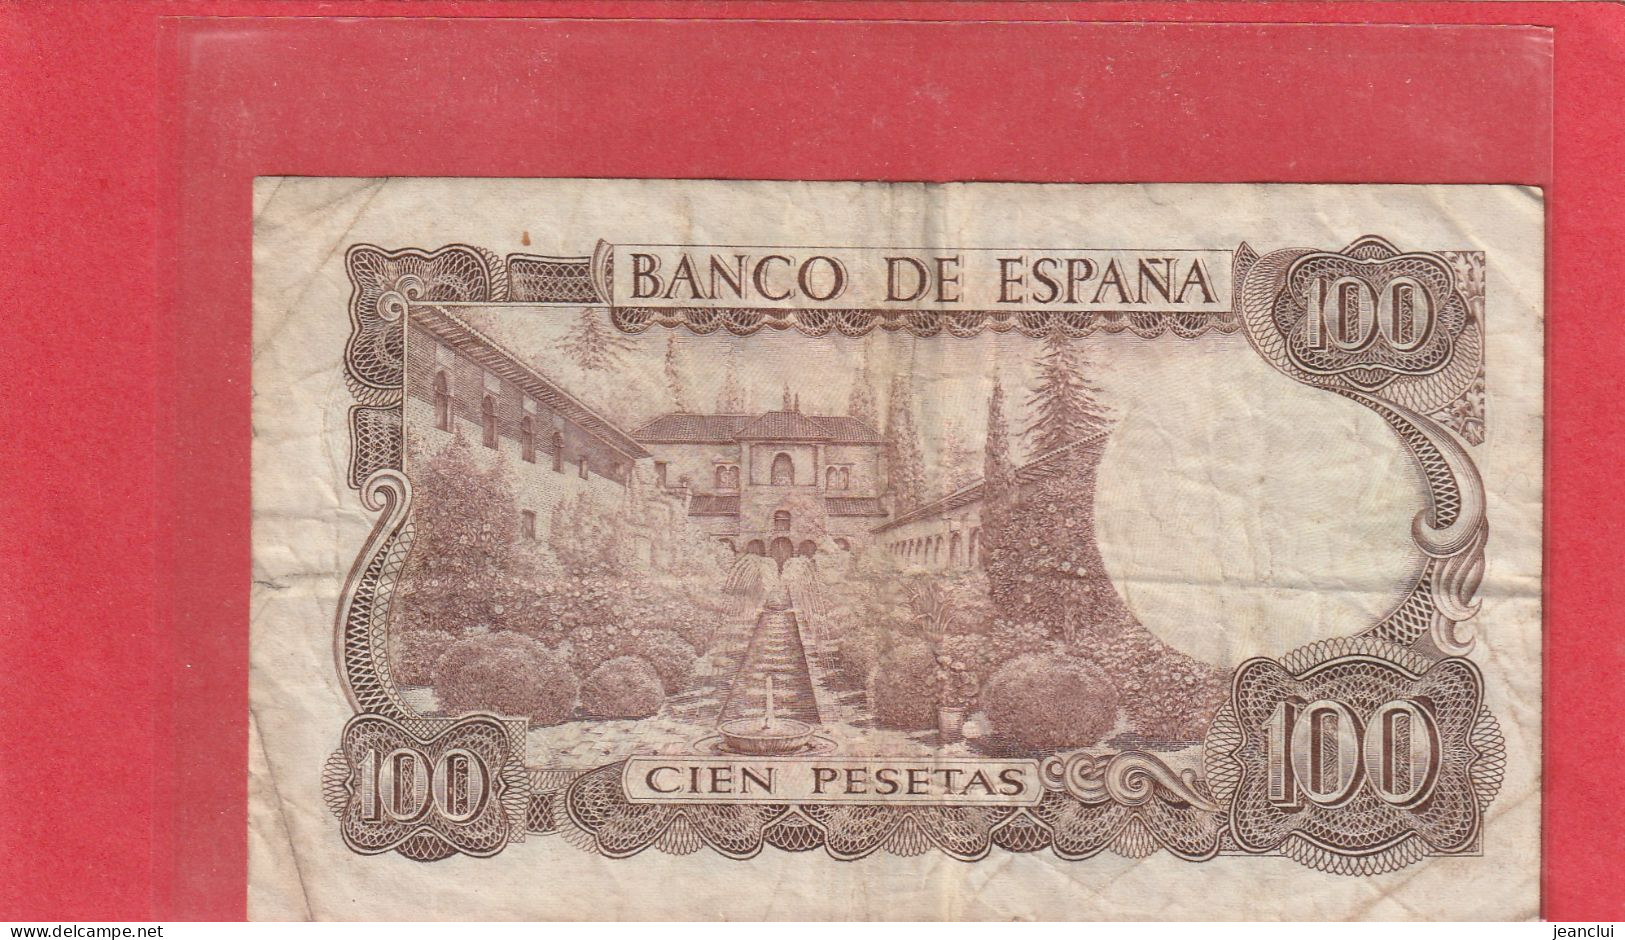 EL BANCO DE ESPANA  .  100 PESETAS  .  17-11-1970  .  N°  7S5865213 .  2 SCANNES  .  BILLET USITE - 100 Pesetas